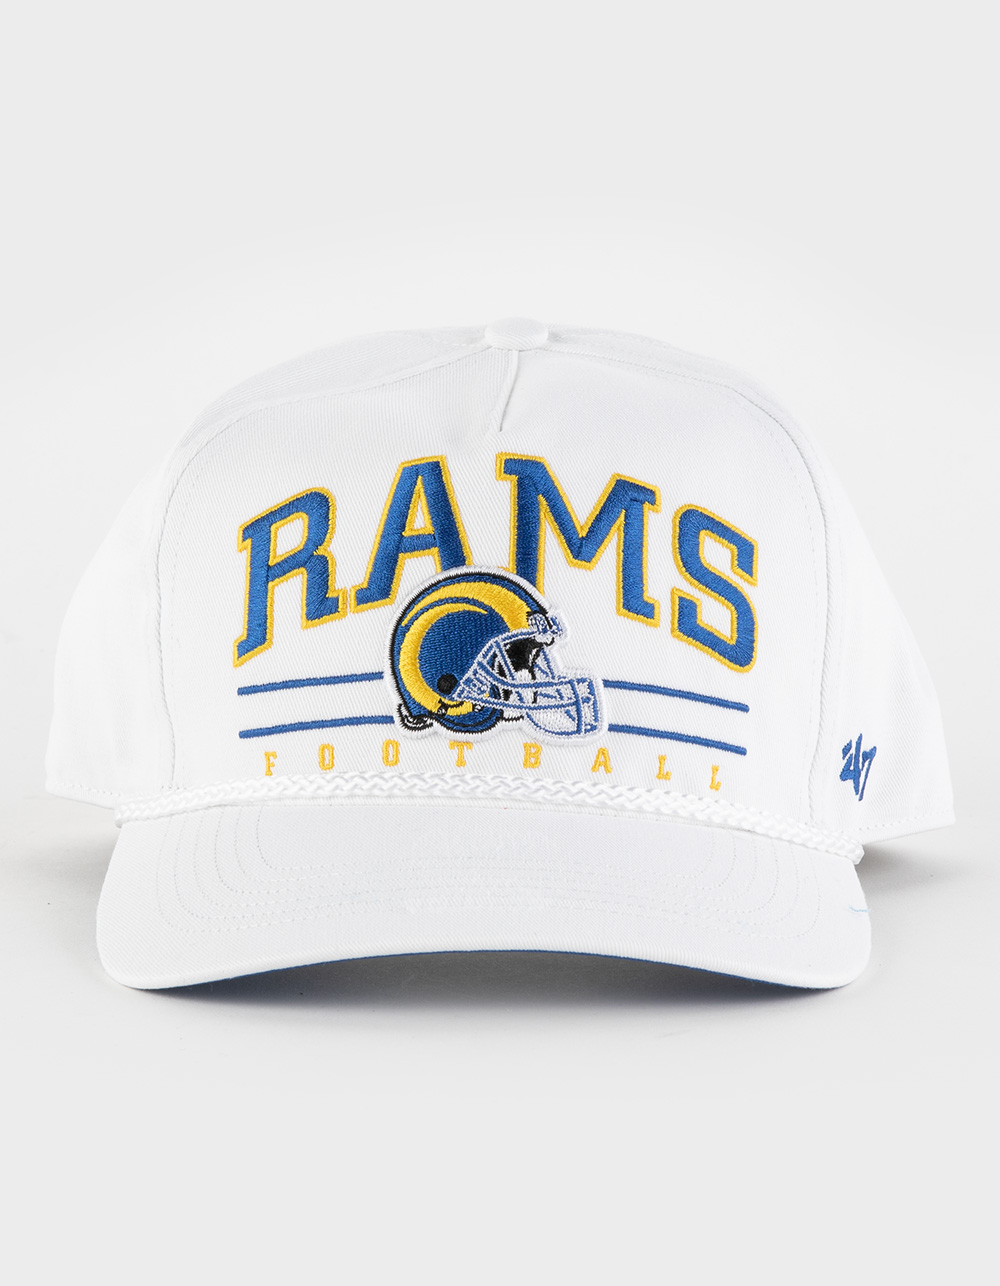 Accessories, St Louis Rams Snapback Hat